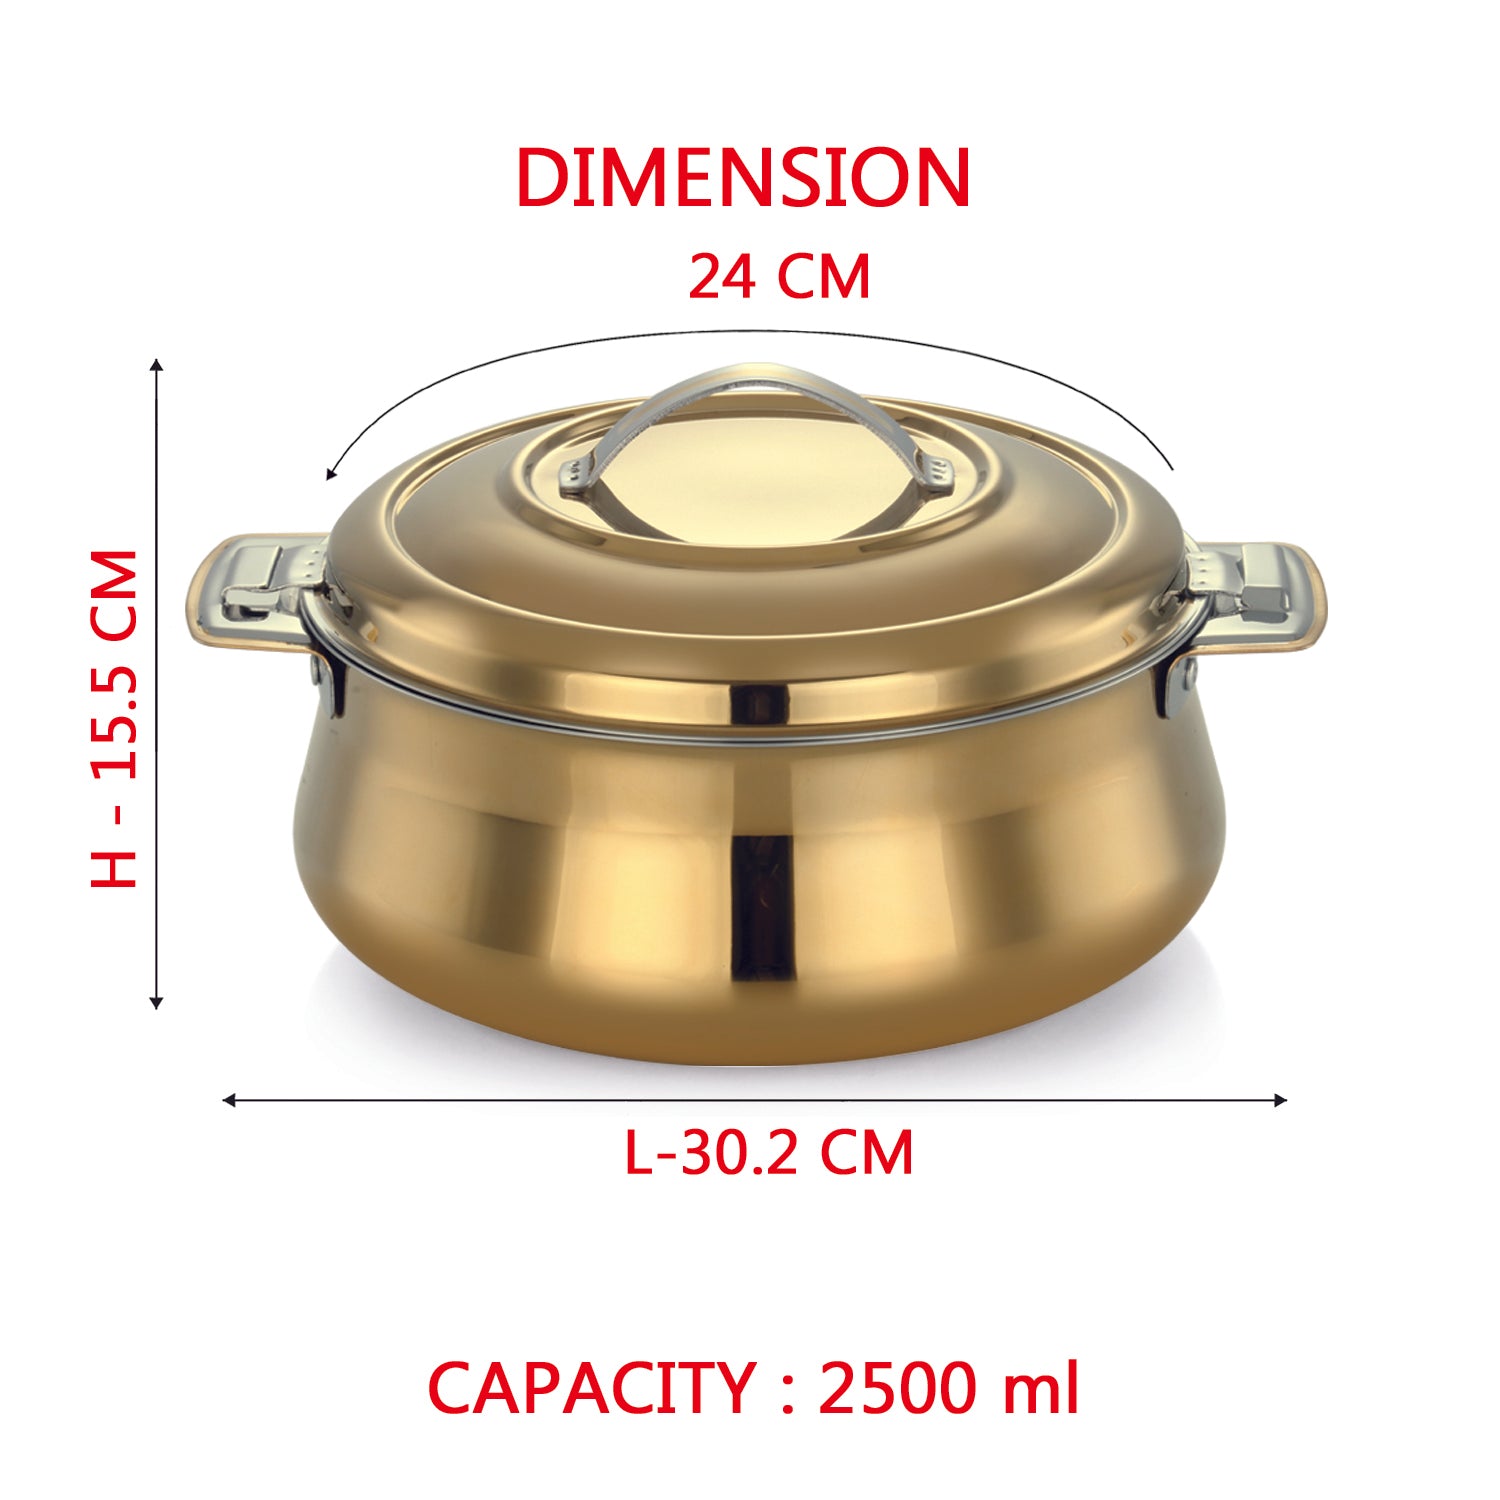 AVIAS Riara Gold Premium Stainless steel casserole dimension 2500 ml